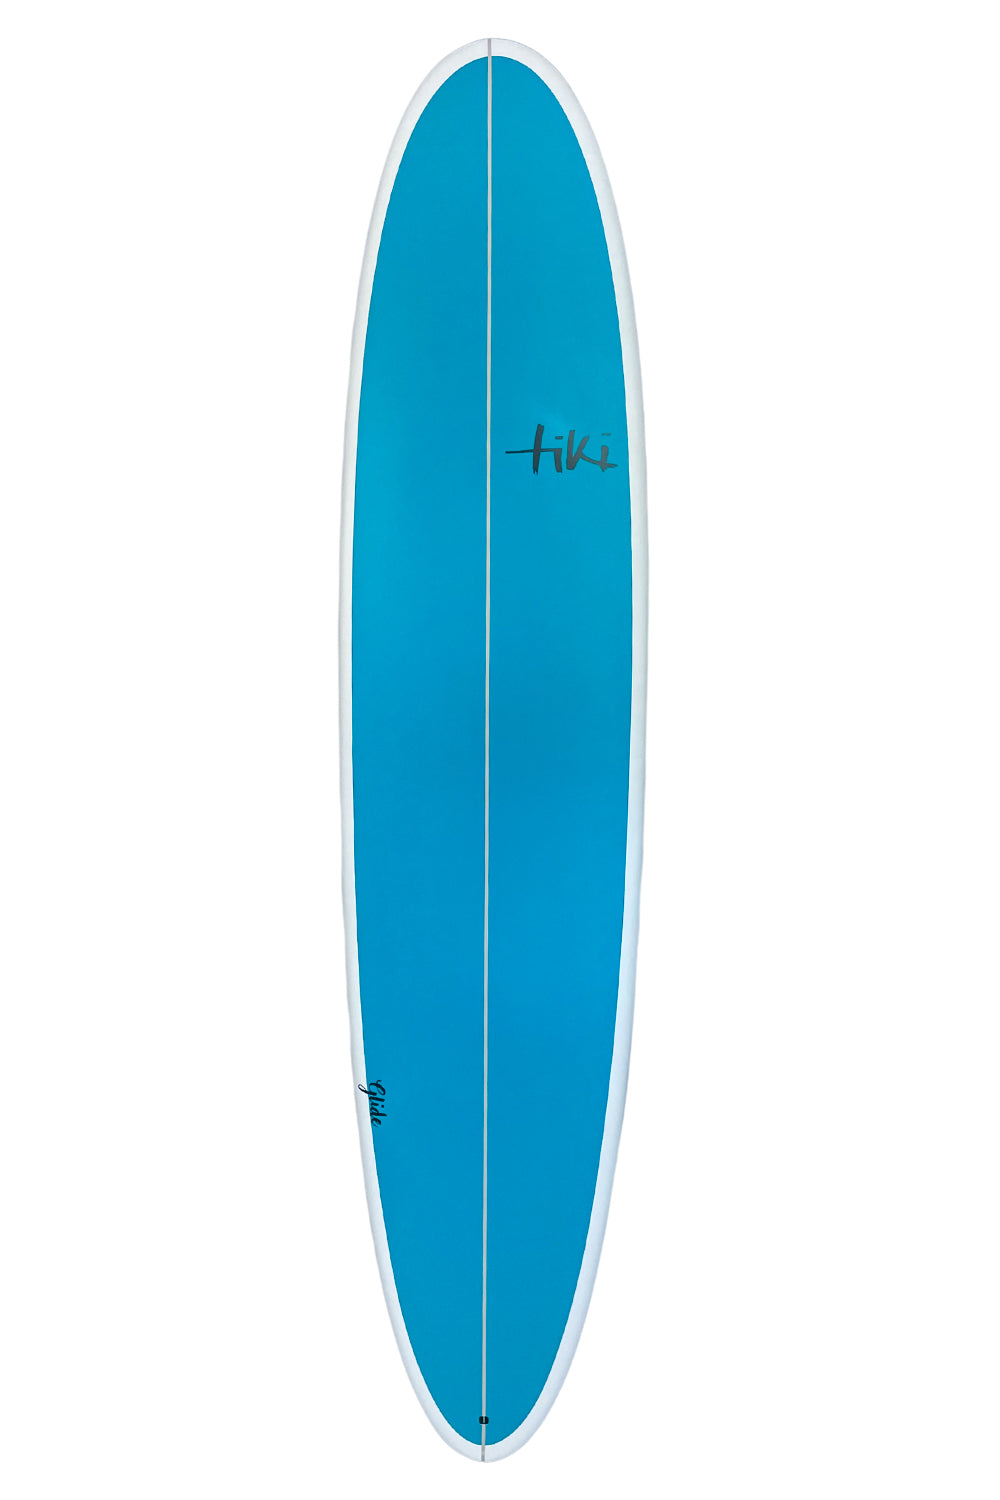 Tiki Evolution Glide Surfboard - Tahitian Teal Deck